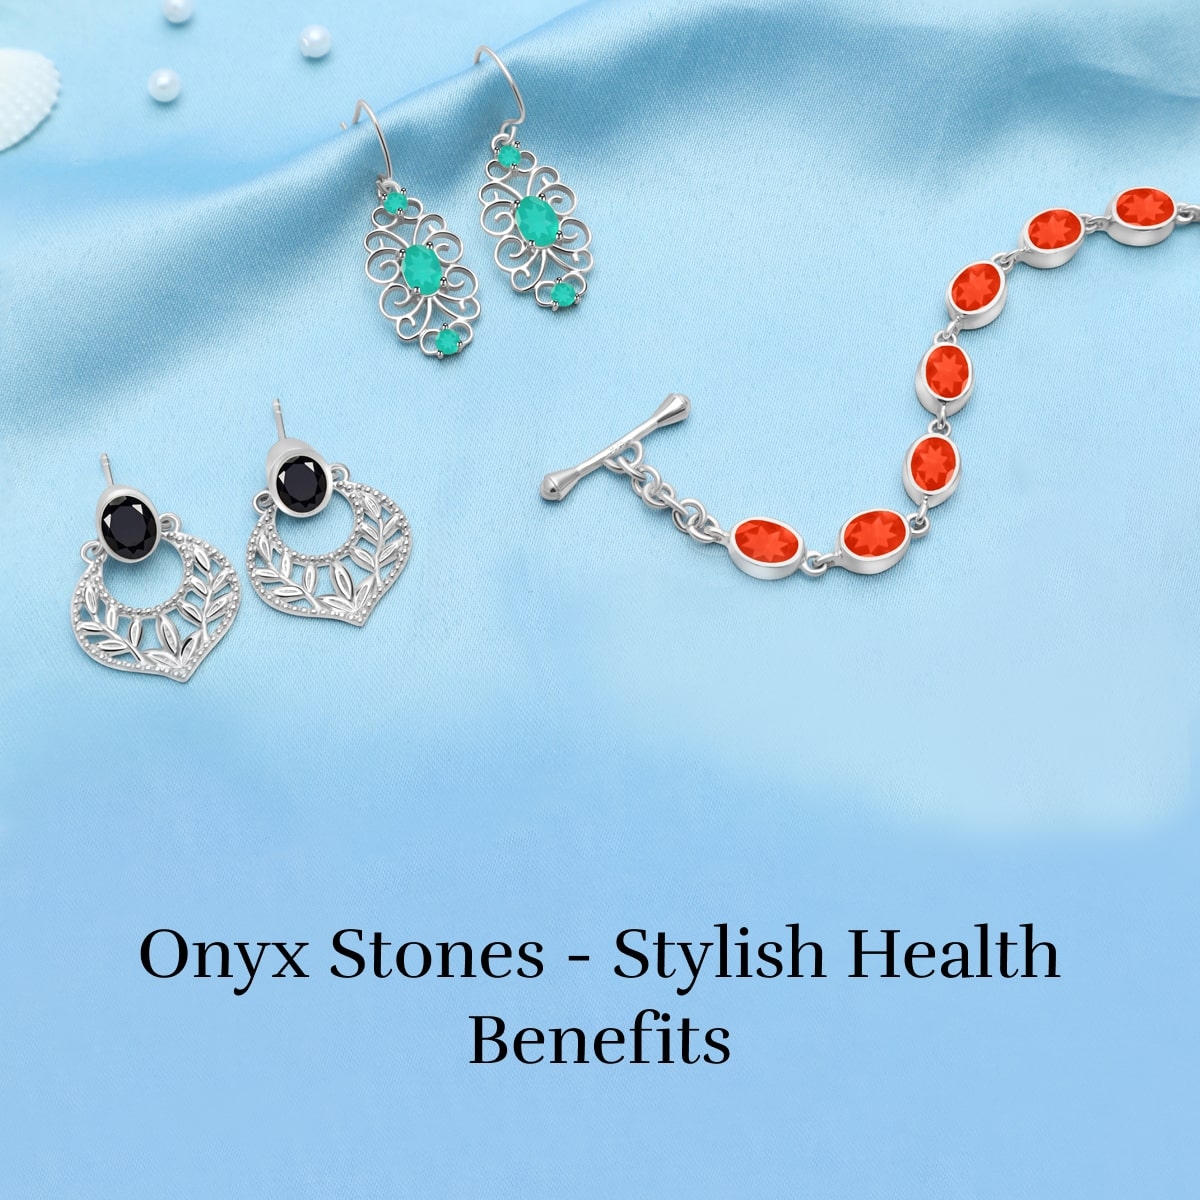 Benefits of wearing Onyx stones